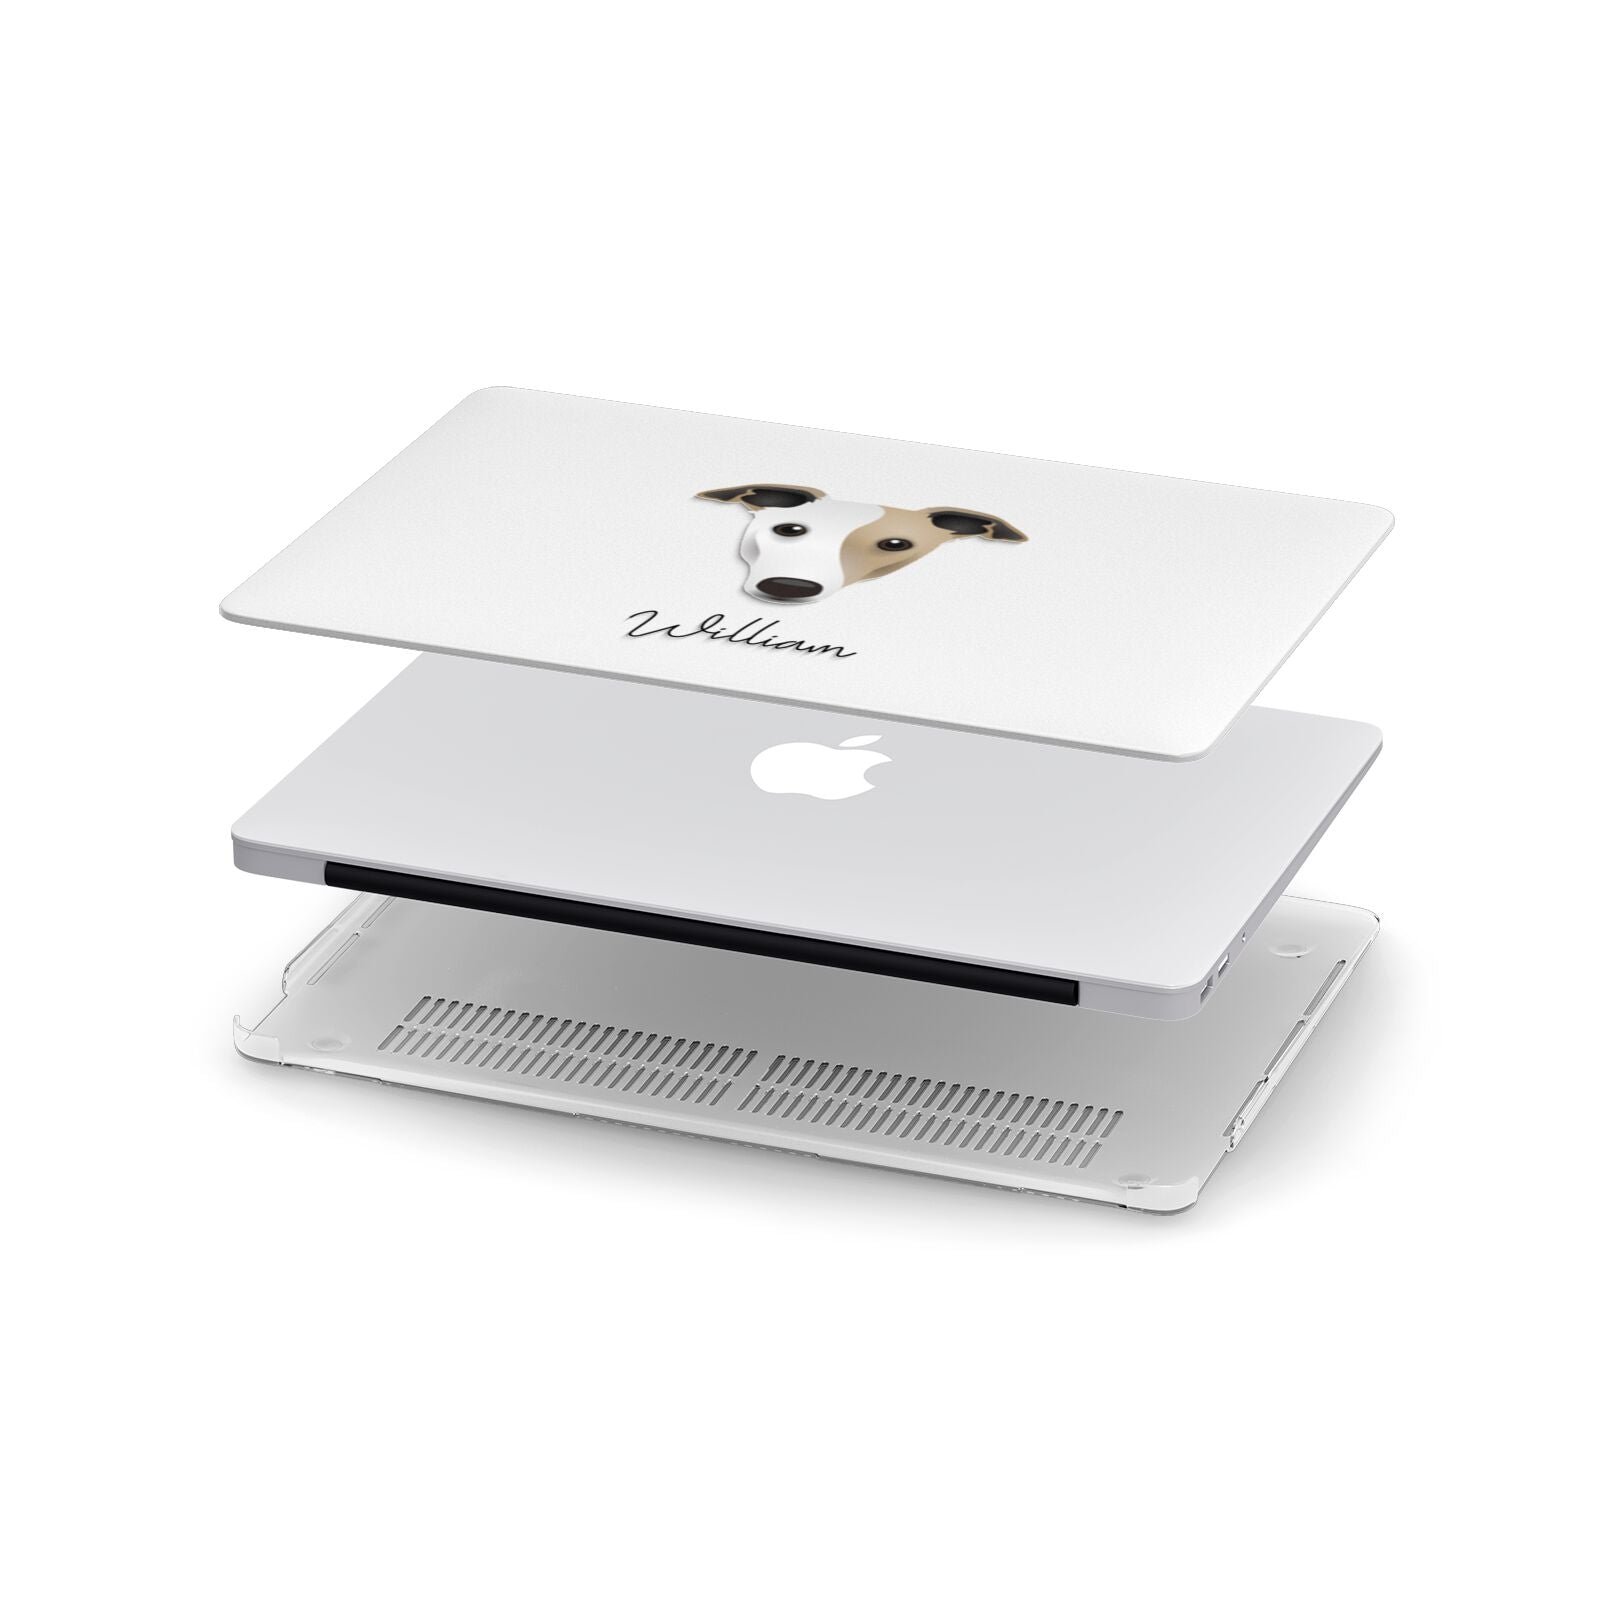 Greyhound Personalised Apple MacBook Case in Detail